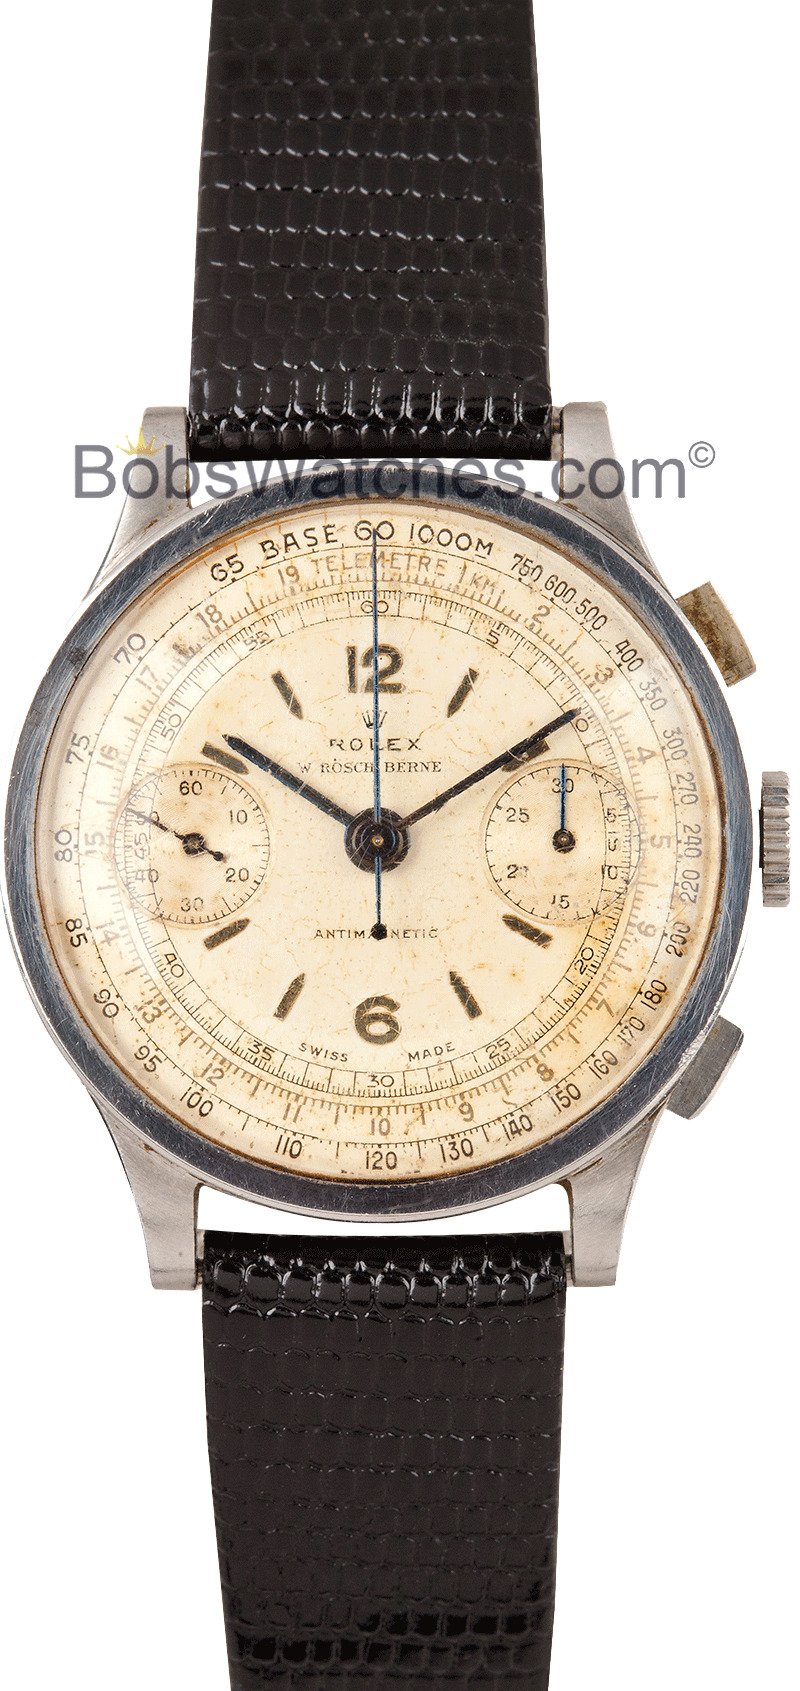 Vintage Rolex Chronograph Watch - 2508 